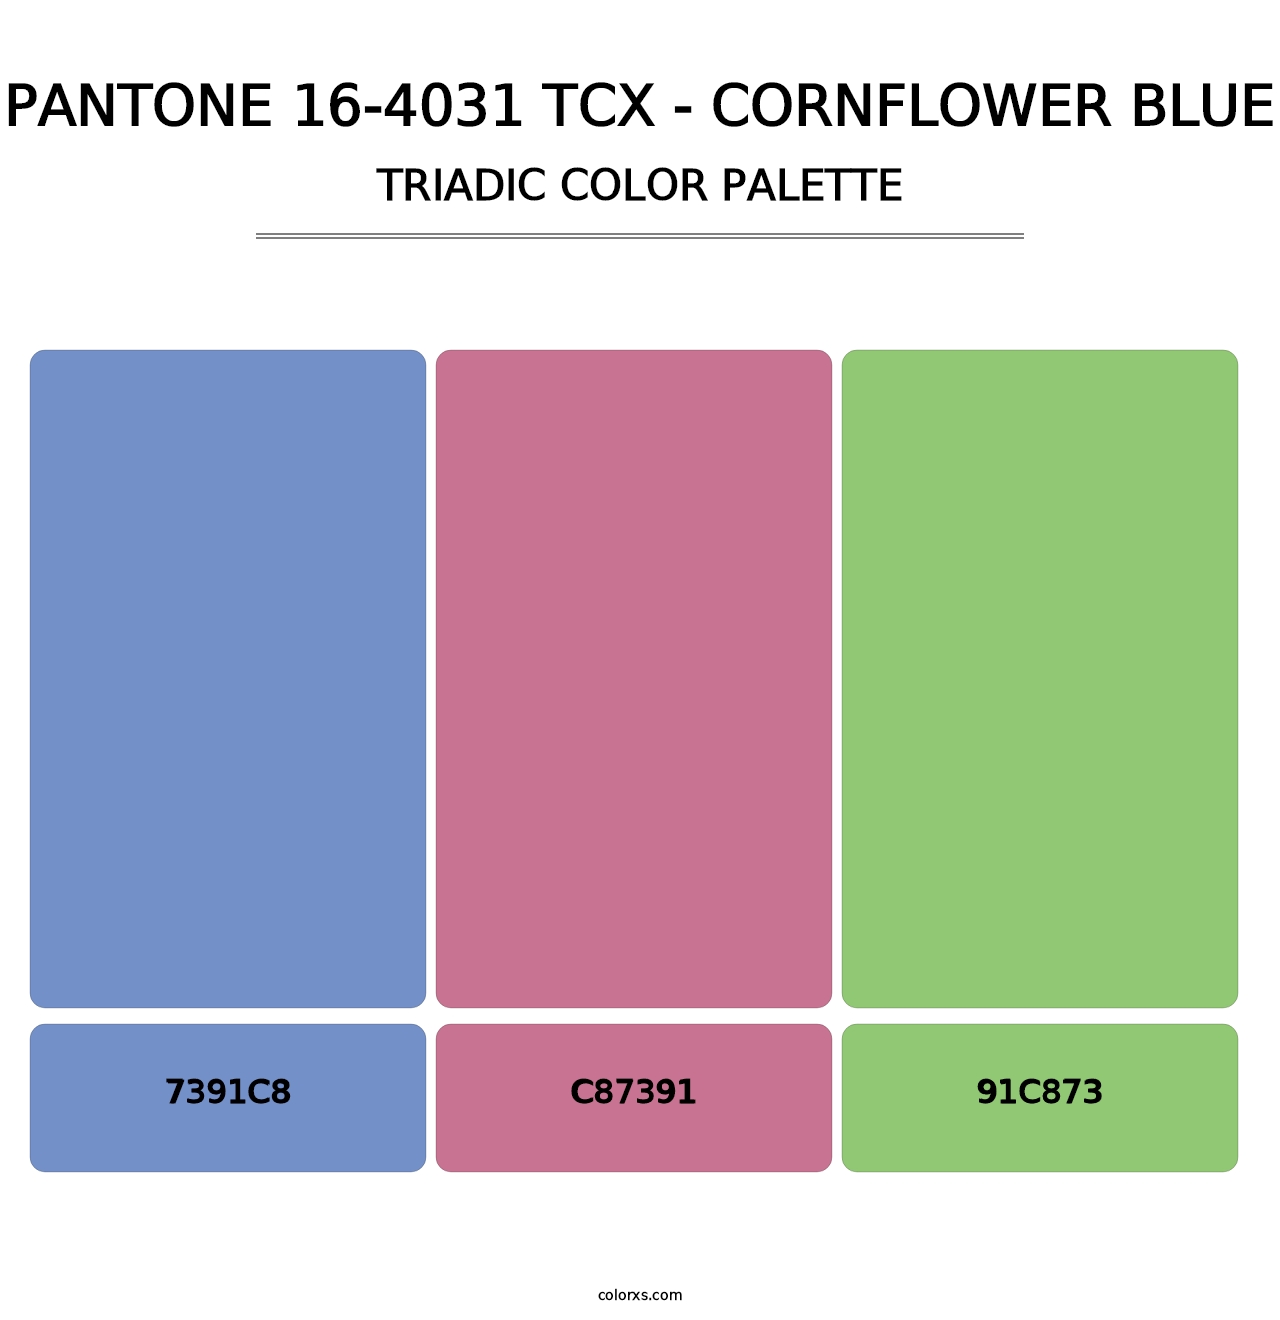 PANTONE 16-4031 TCX - Cornflower Blue - Triadic Color Palette